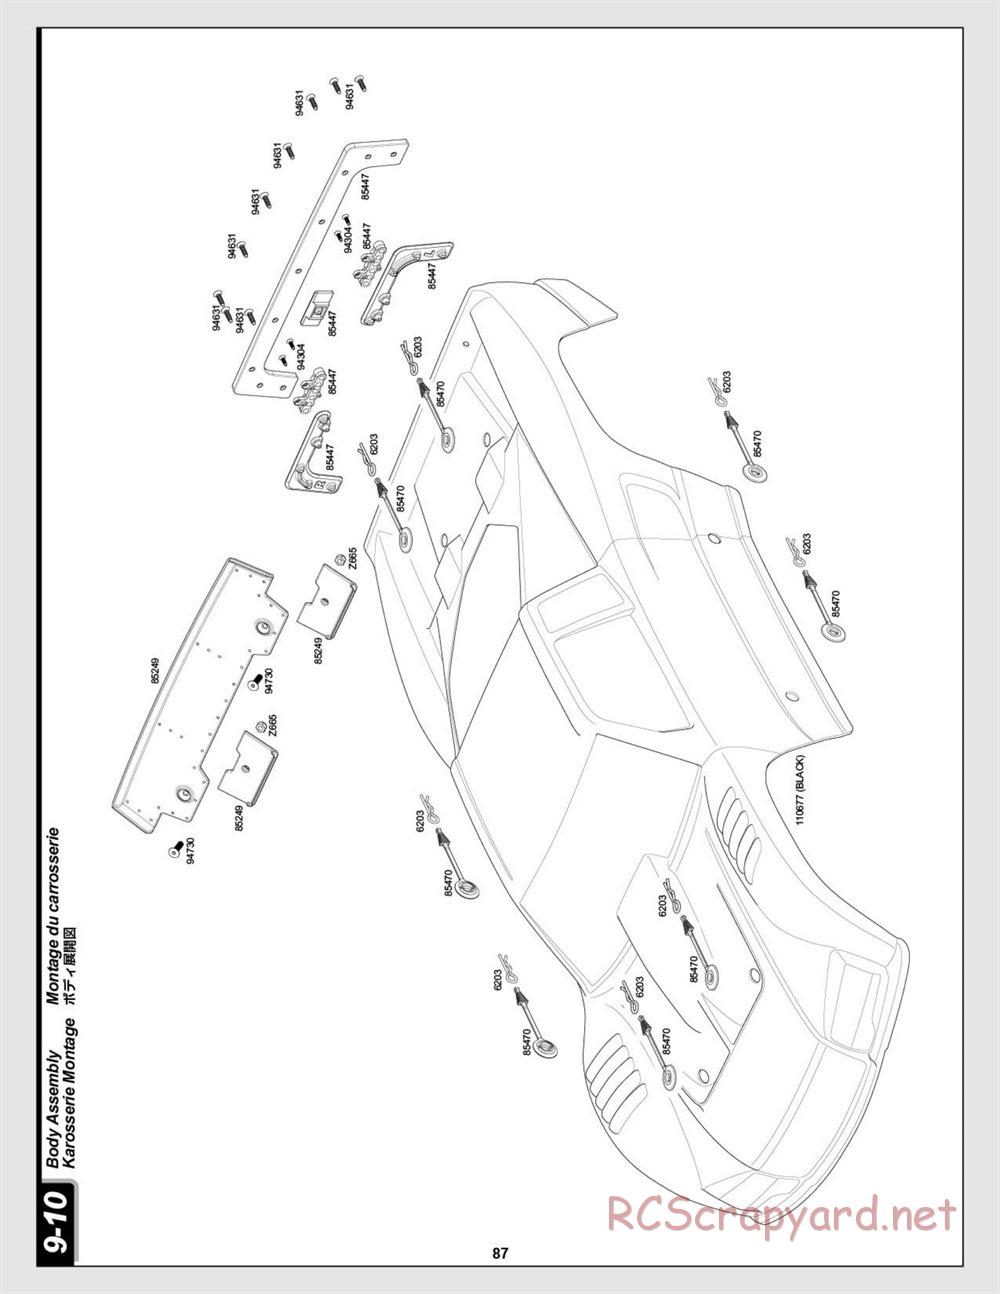 HPI - Baja 5T - Manual - Page 87